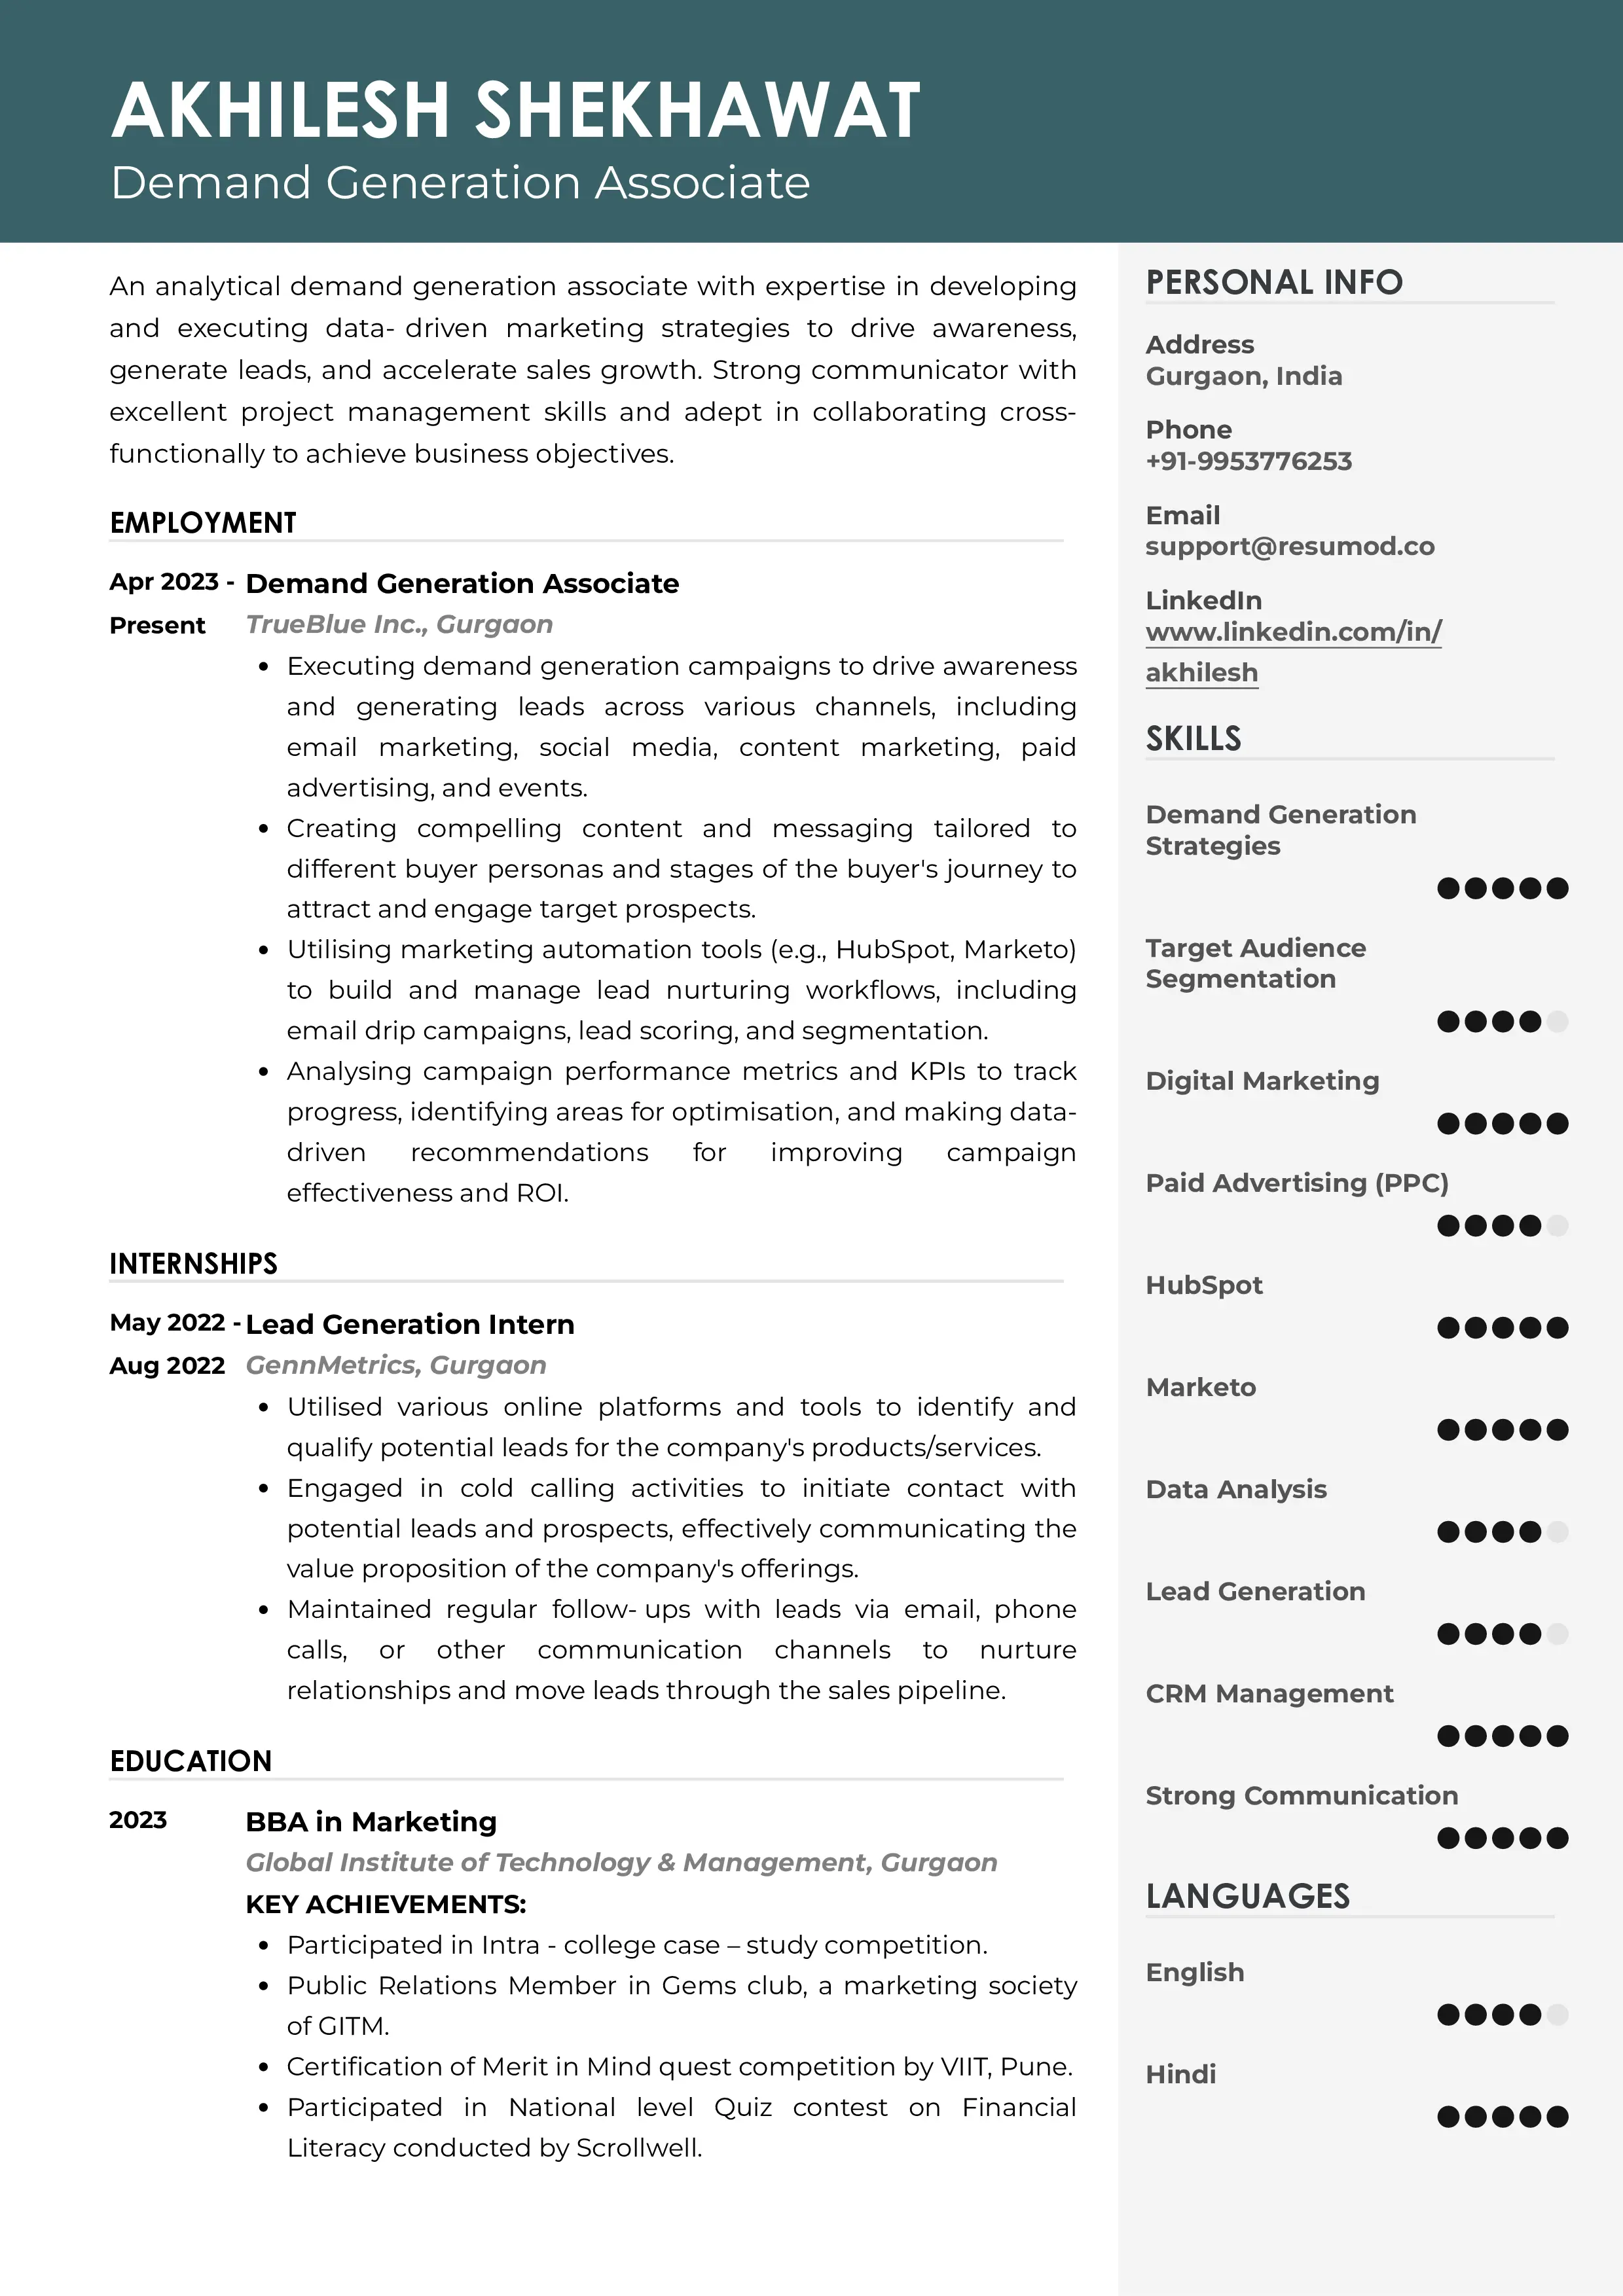 Sample Resume of Demand Generation Associate | Free Resume Templates & Samples on Resumod.co